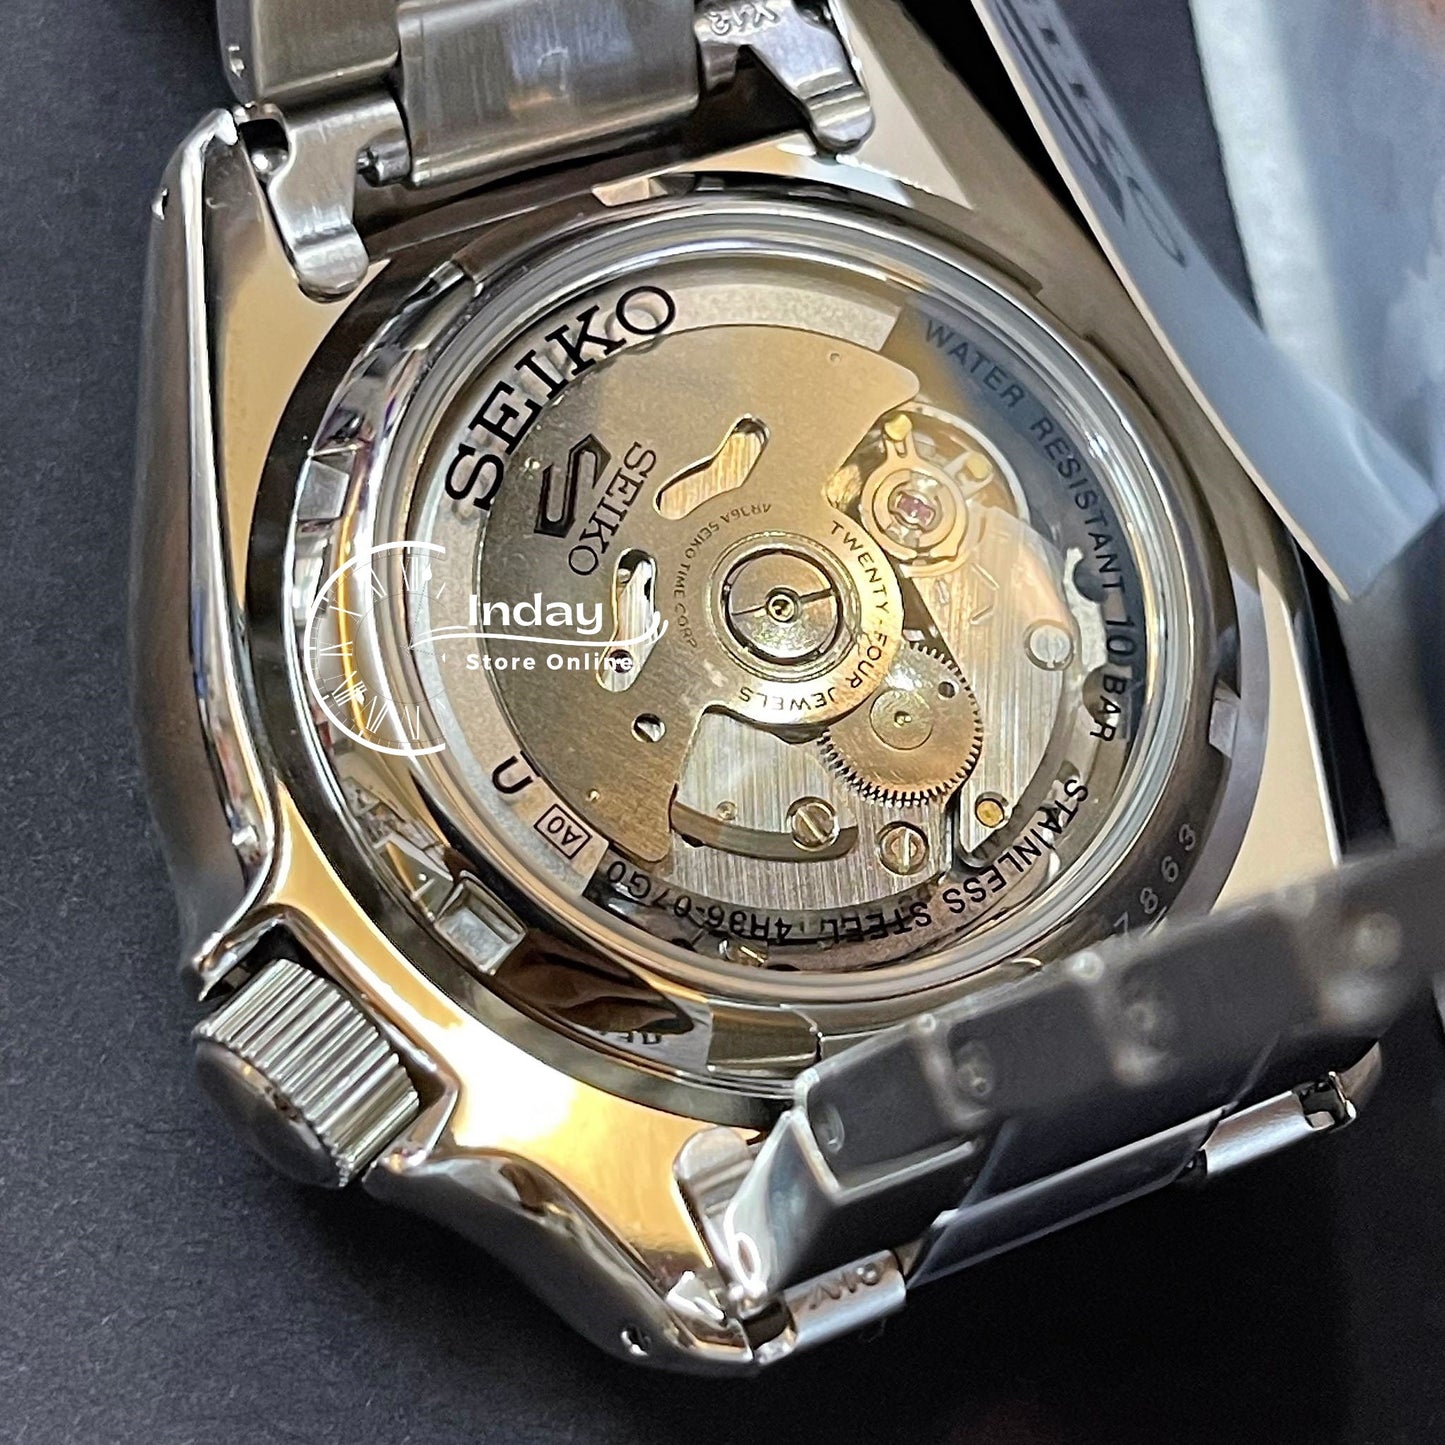 Seiko Automatic Men's Watch SRPD51K1